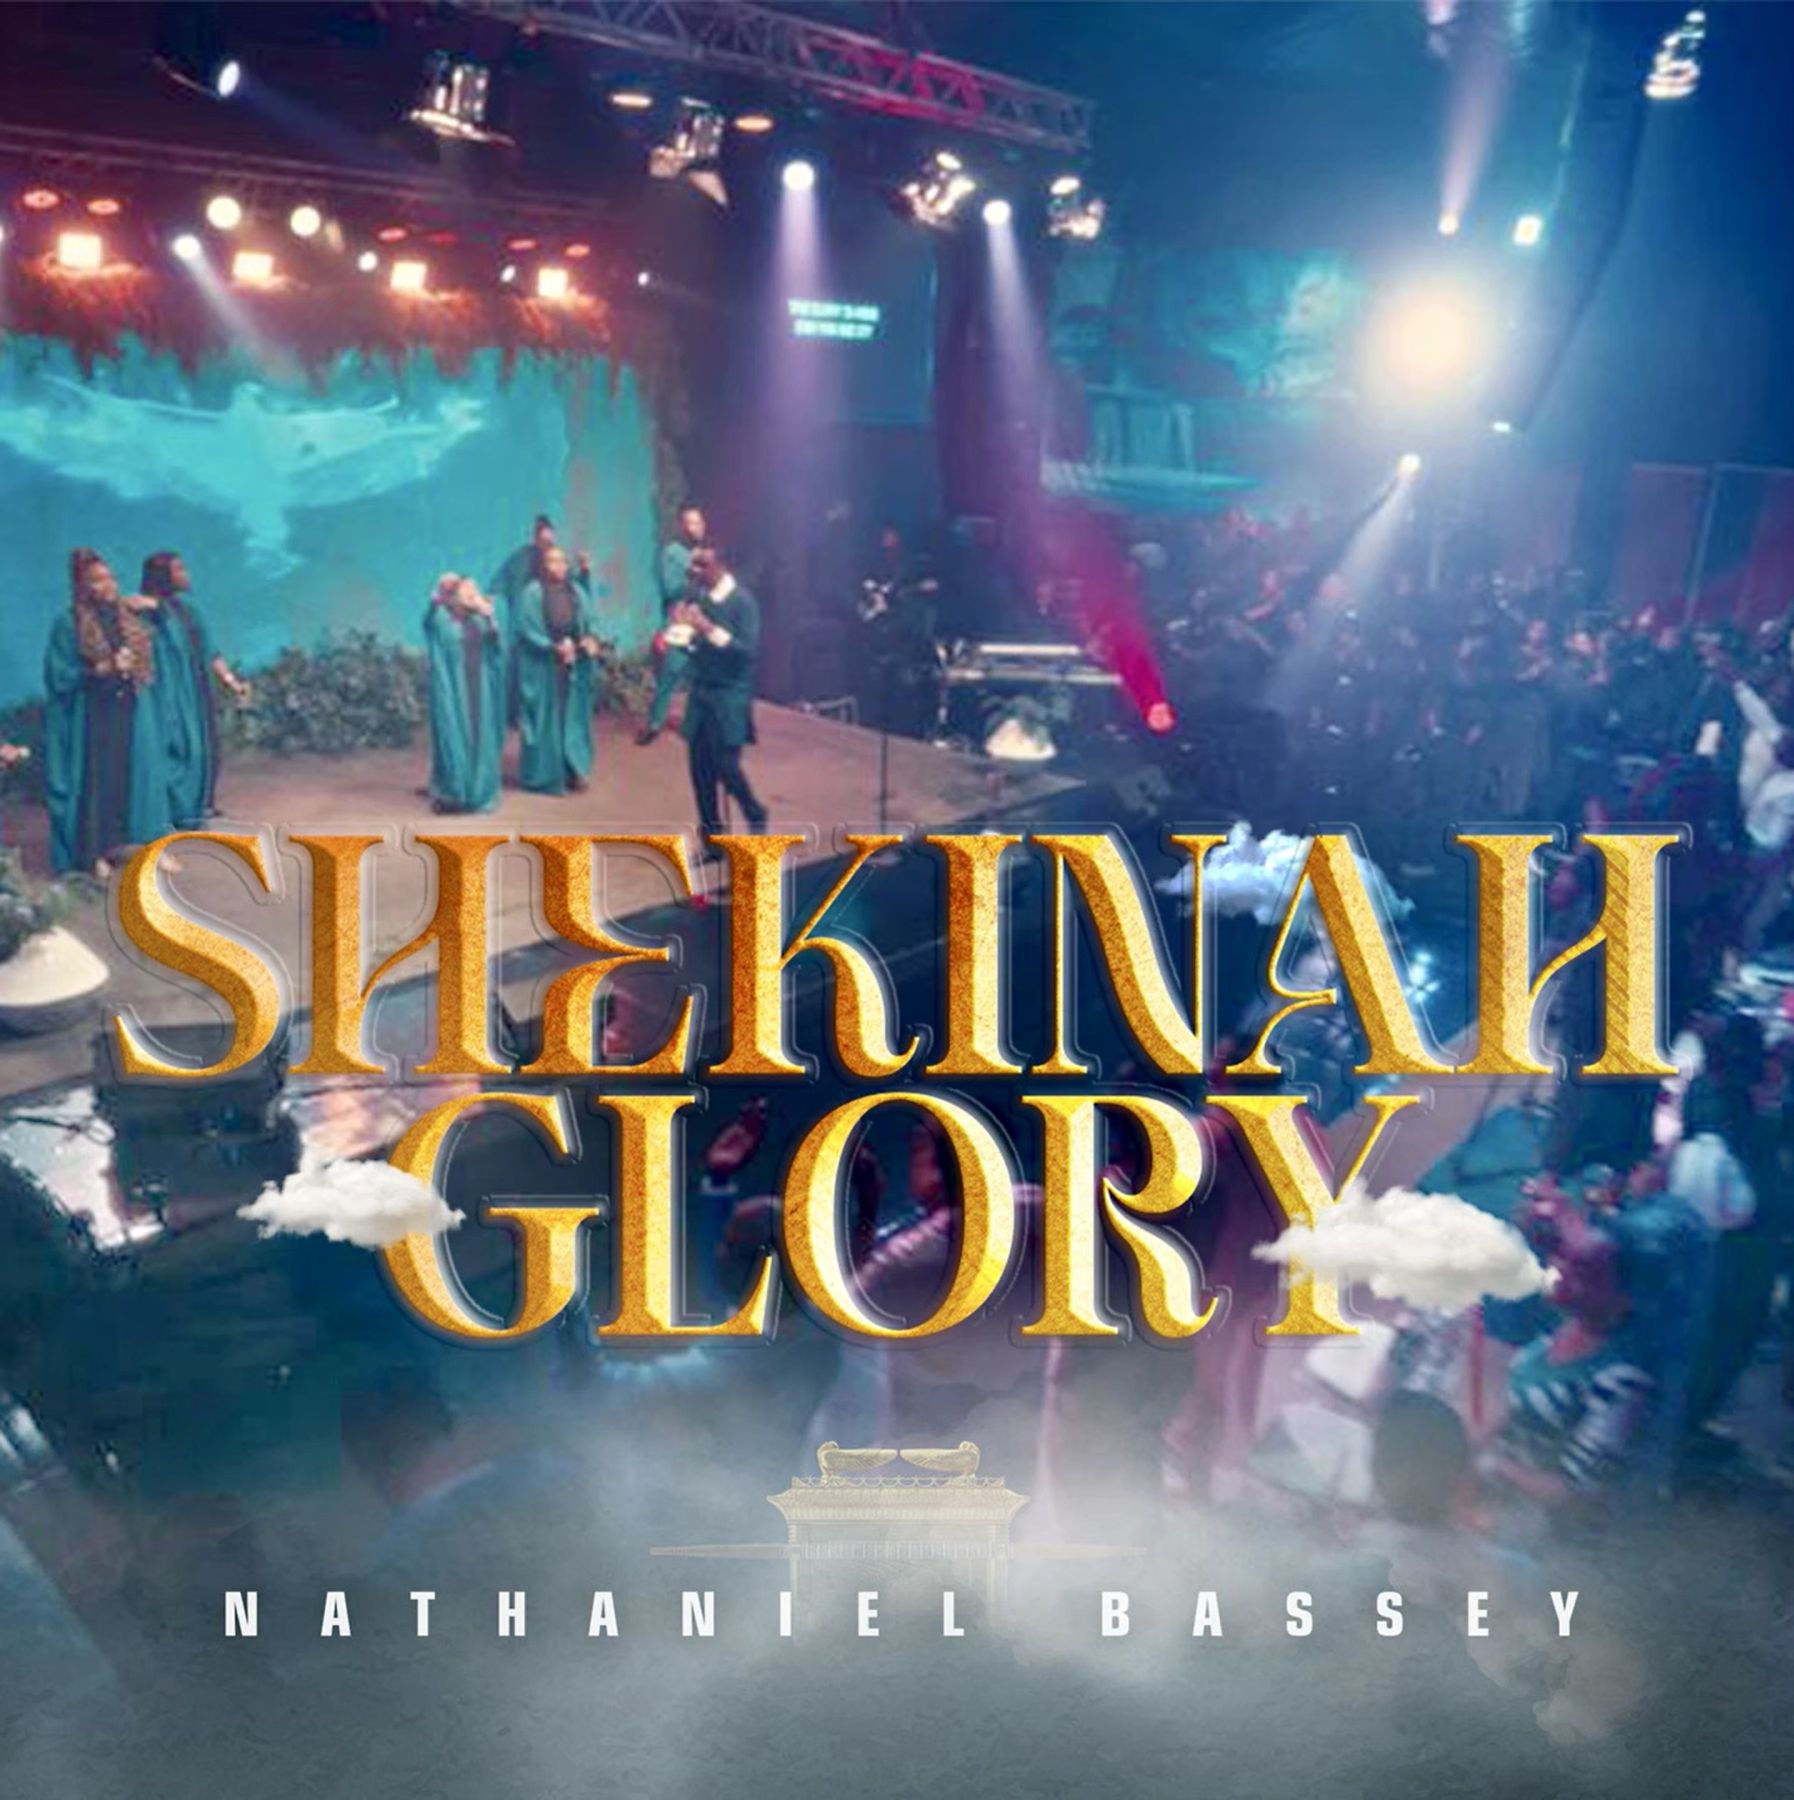 Nathaniel Bassey - Shekinah Glory (Live) 1